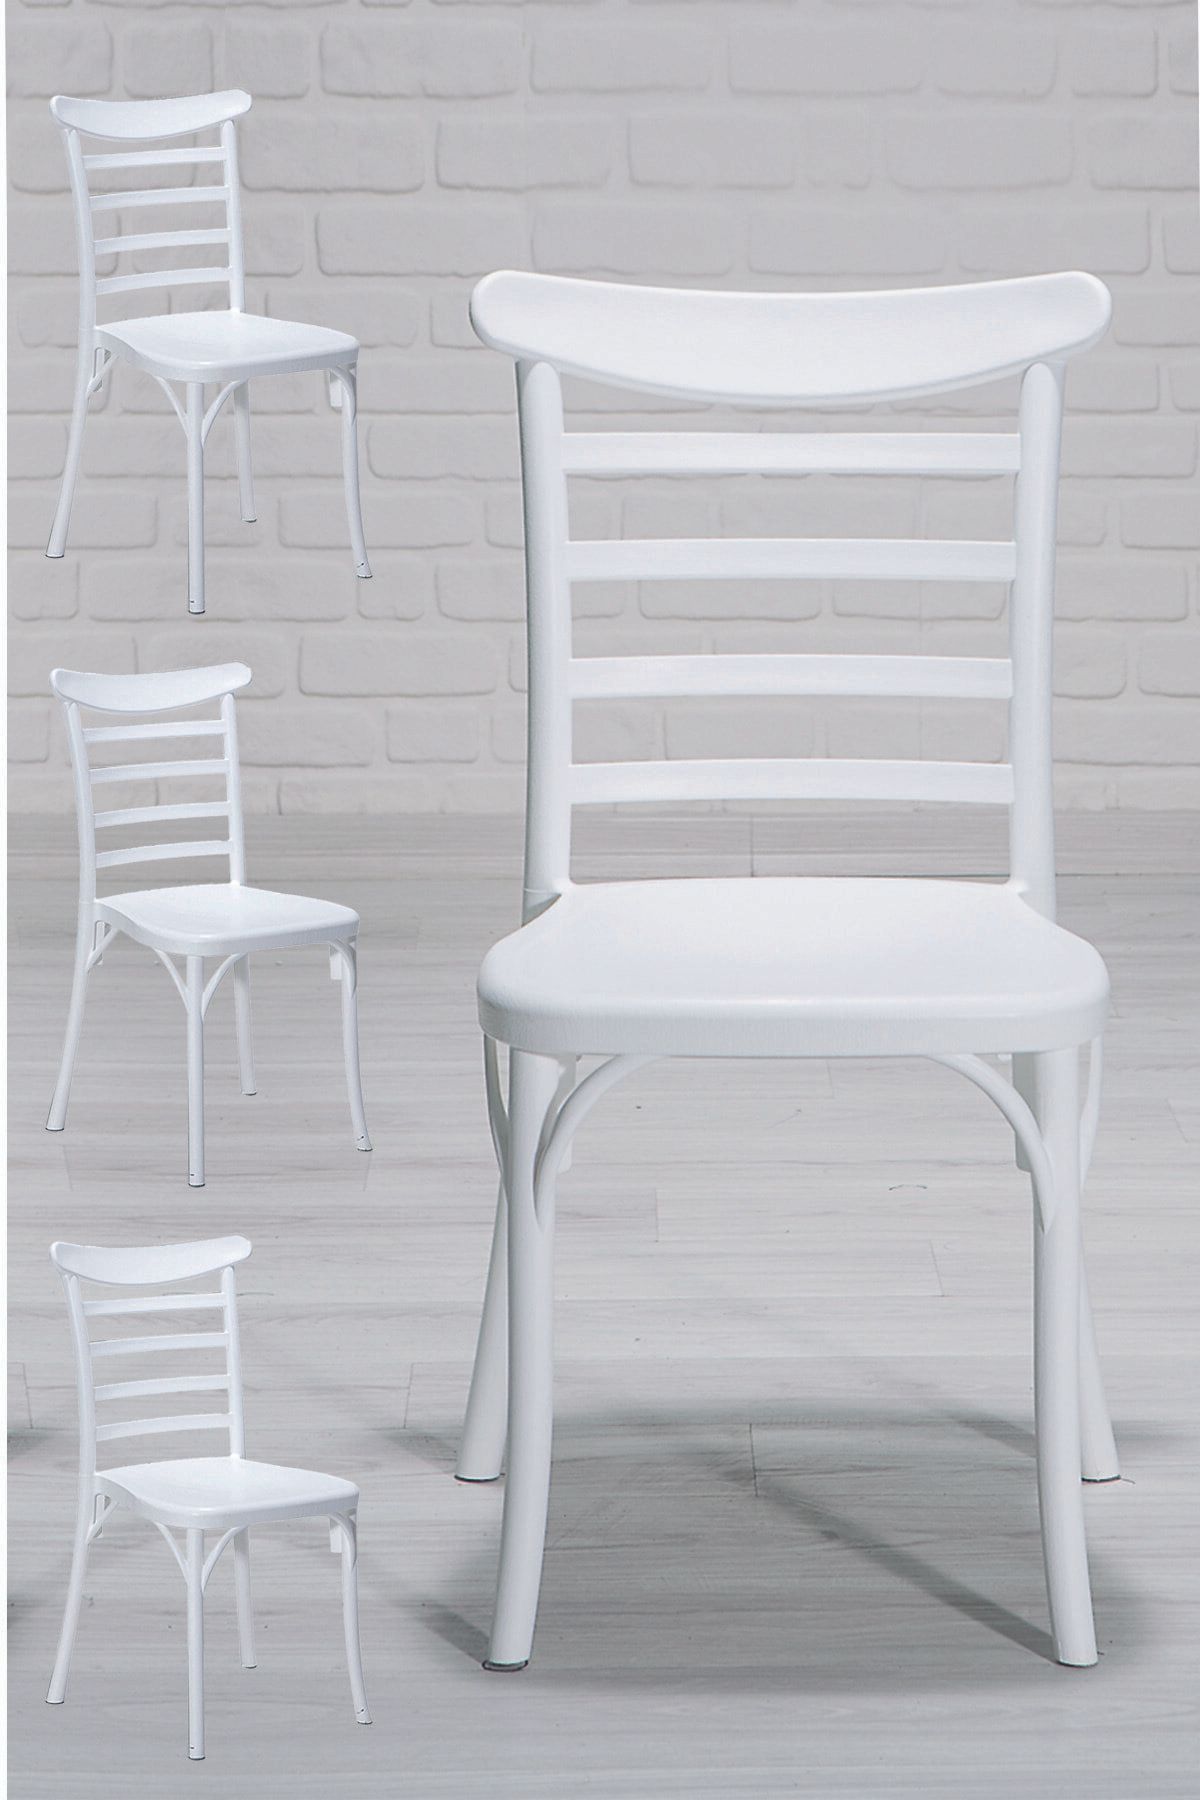 MOBETTO Efes Home Mutfak Sandalye 4 Adet – Beyaz